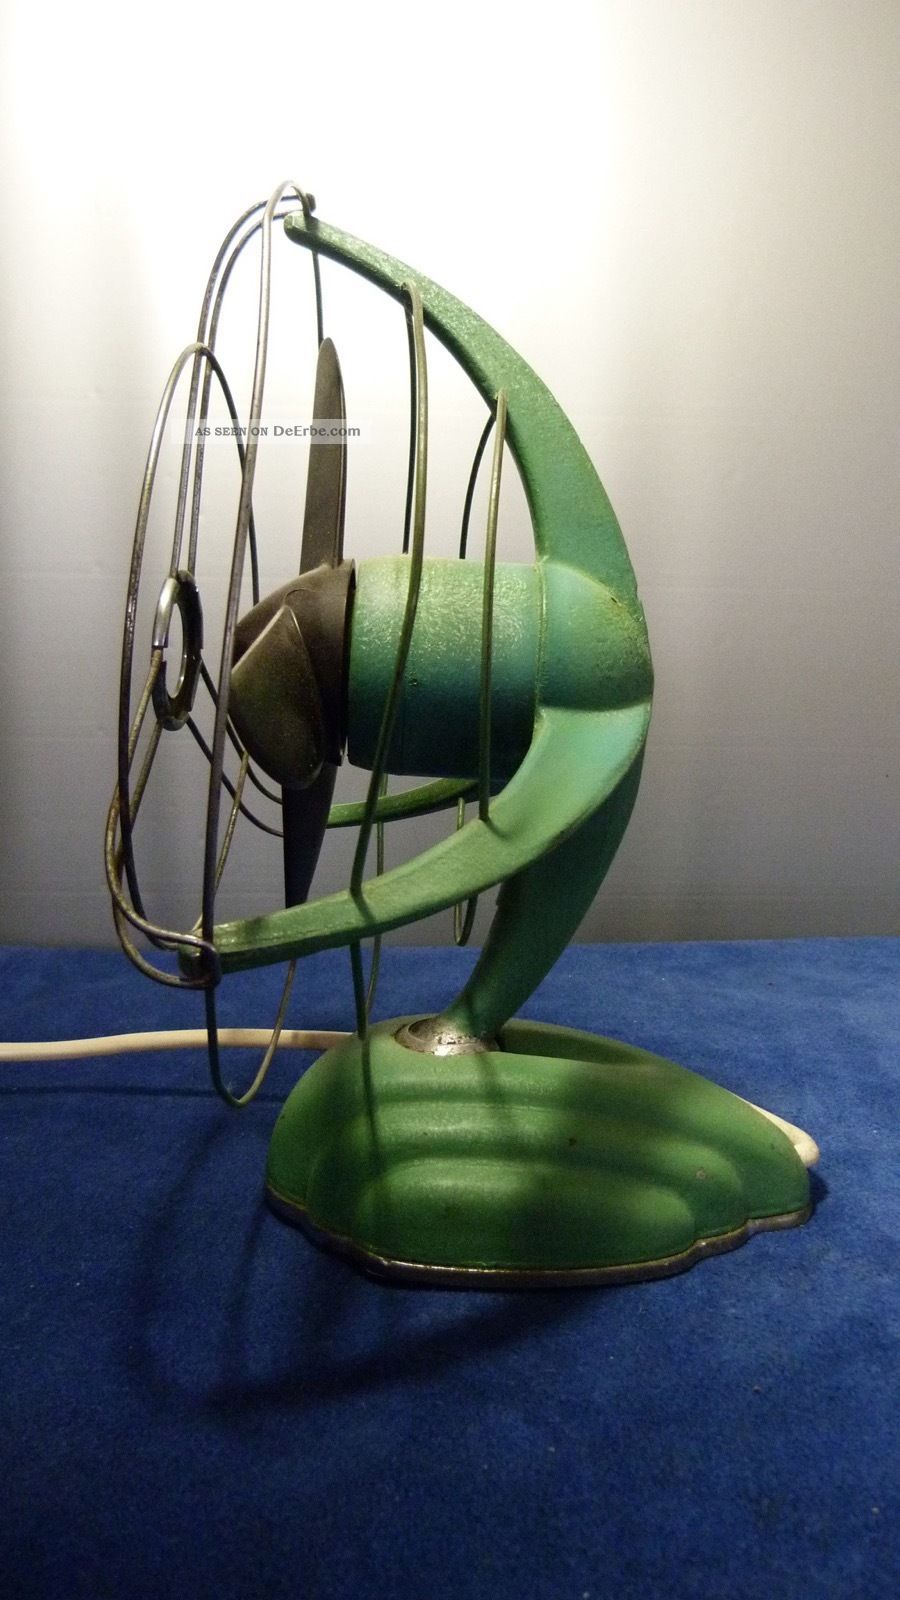 Vtg.  Libelle Tisch Ventilator Art Deco Streamline Design Windmaschine 50er Jahre Haushalt Bild